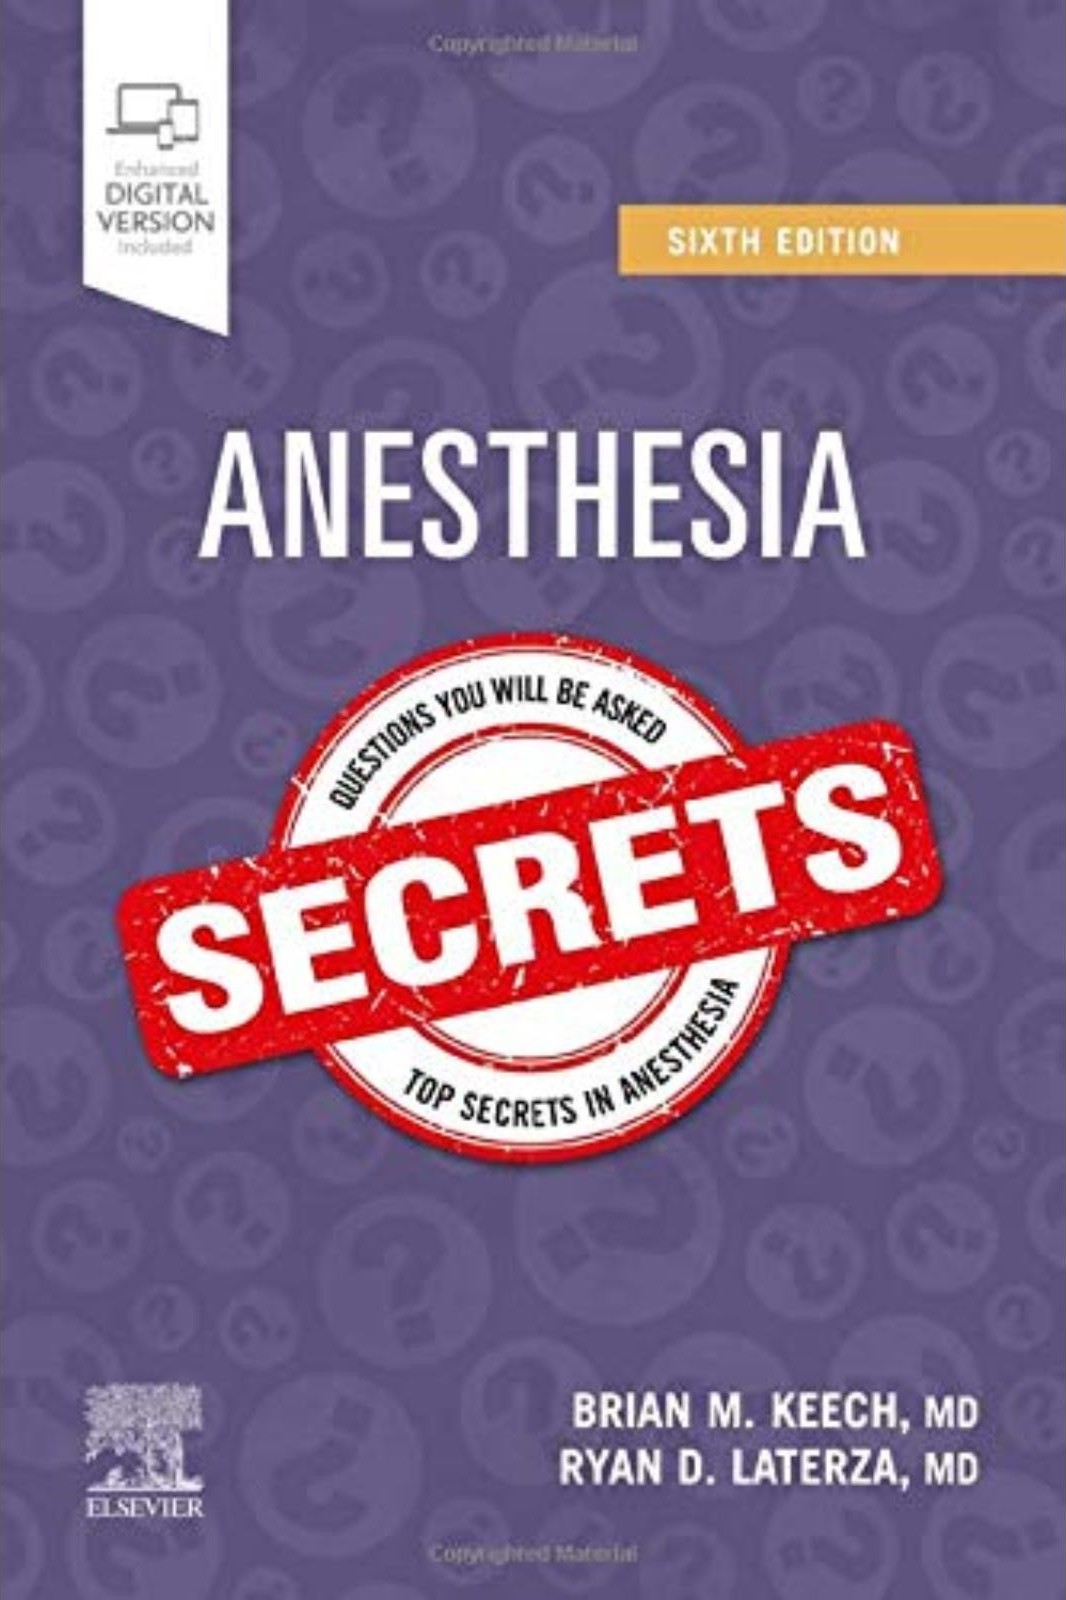 Duke's Anesthesia Secrets,5e